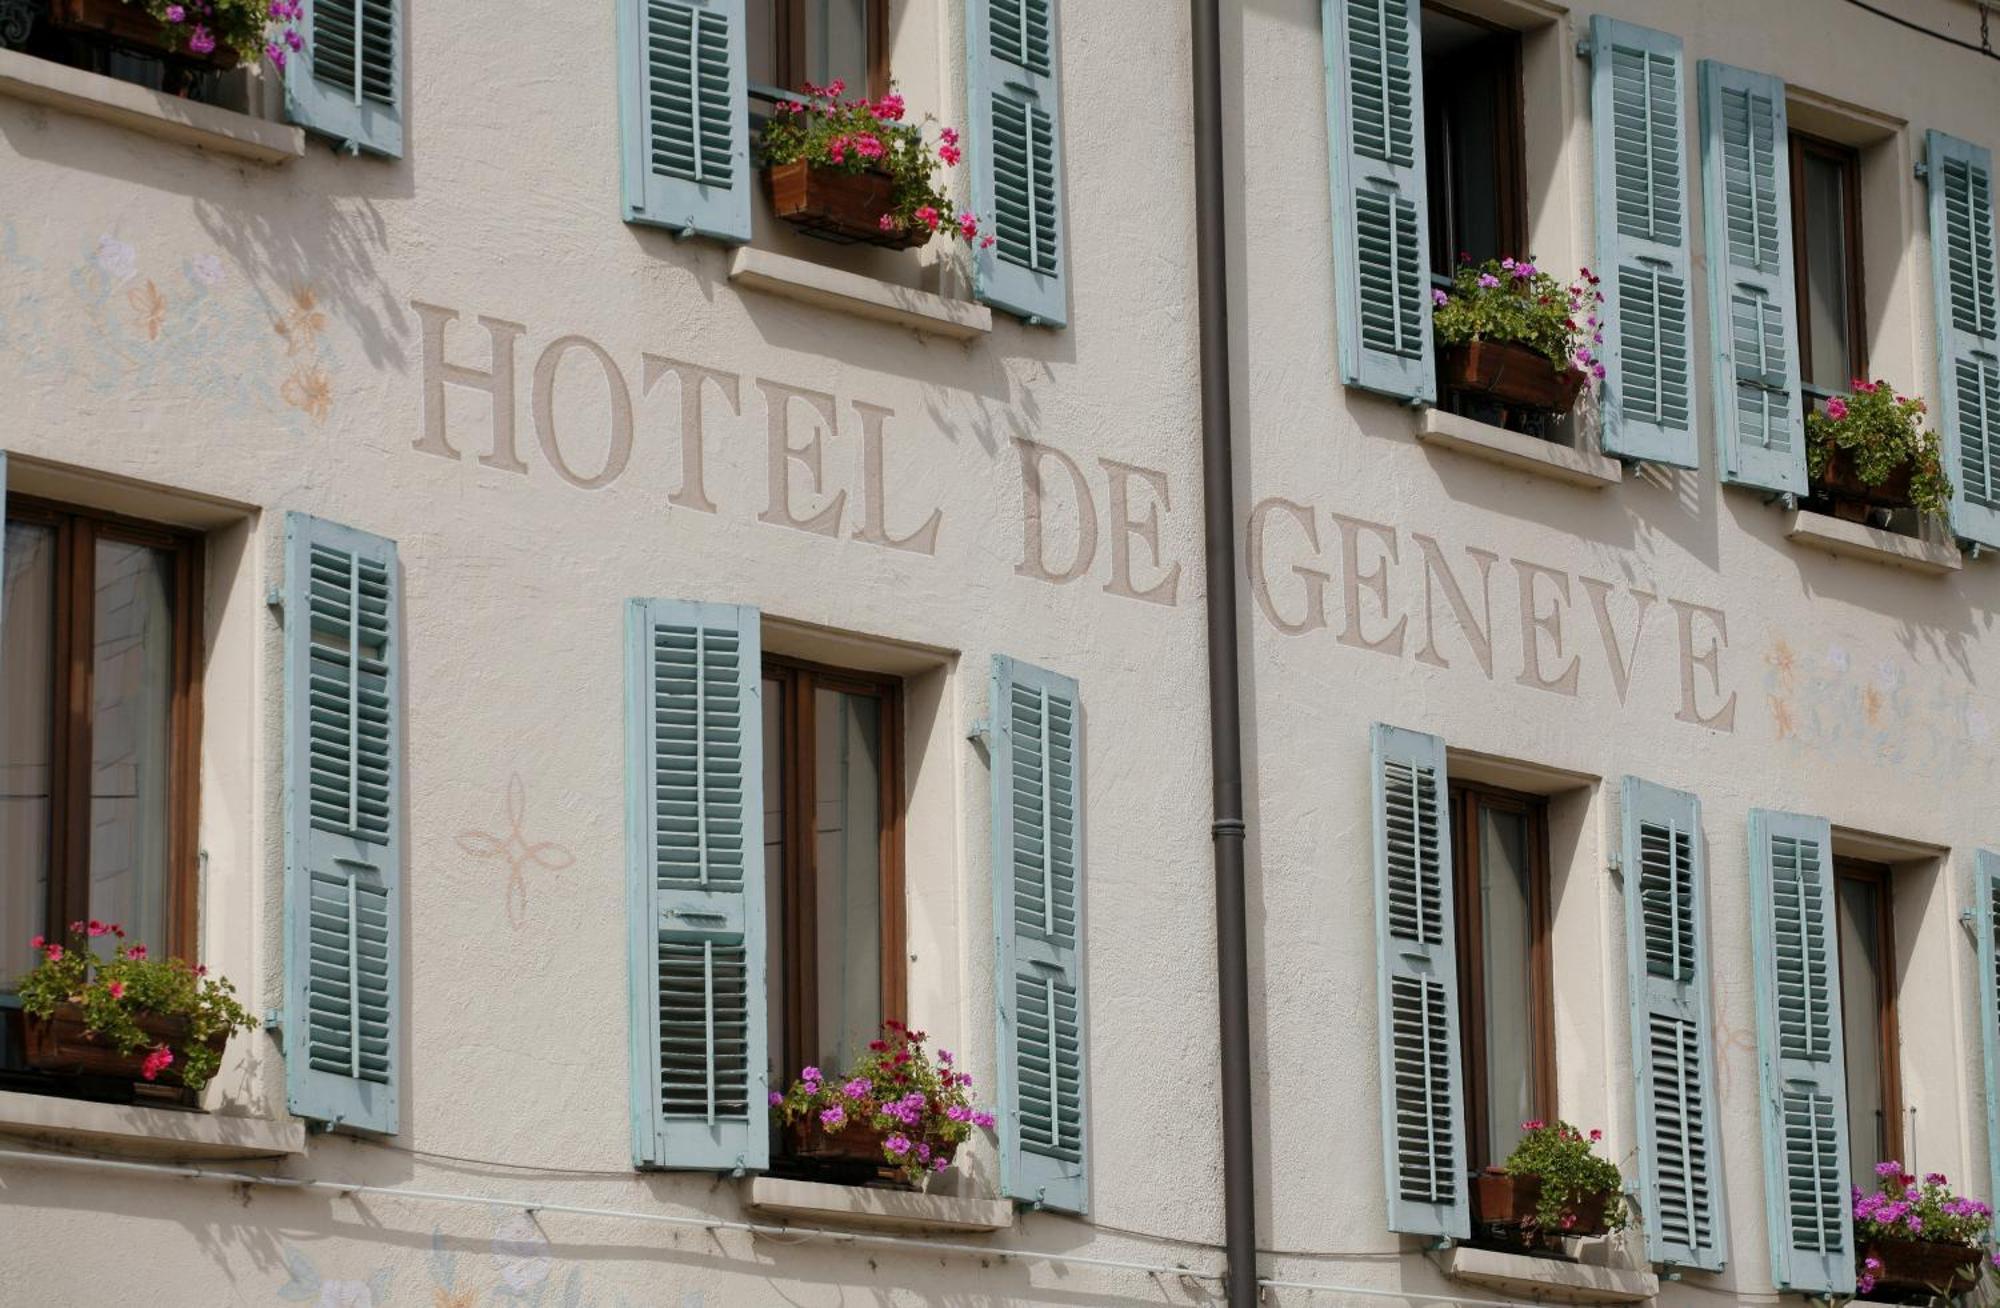 Hotel De Geneve Et Restaurant , Faverges-Seythenex Zewnętrze zdjęcie